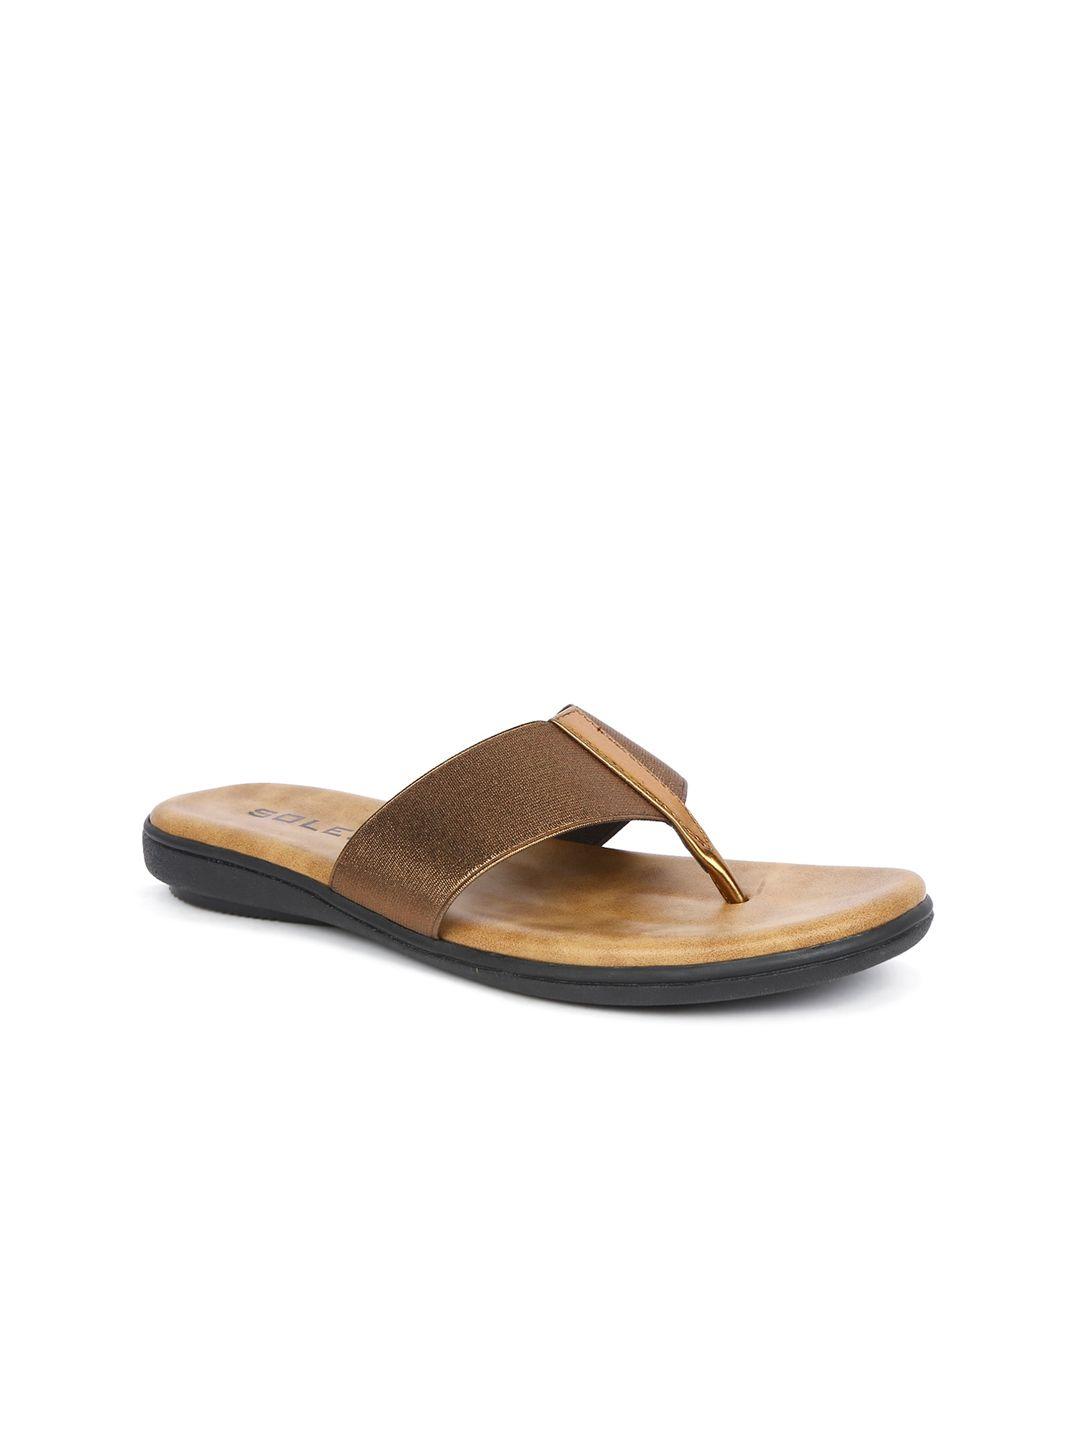 soles women bronze-toned open toe flats